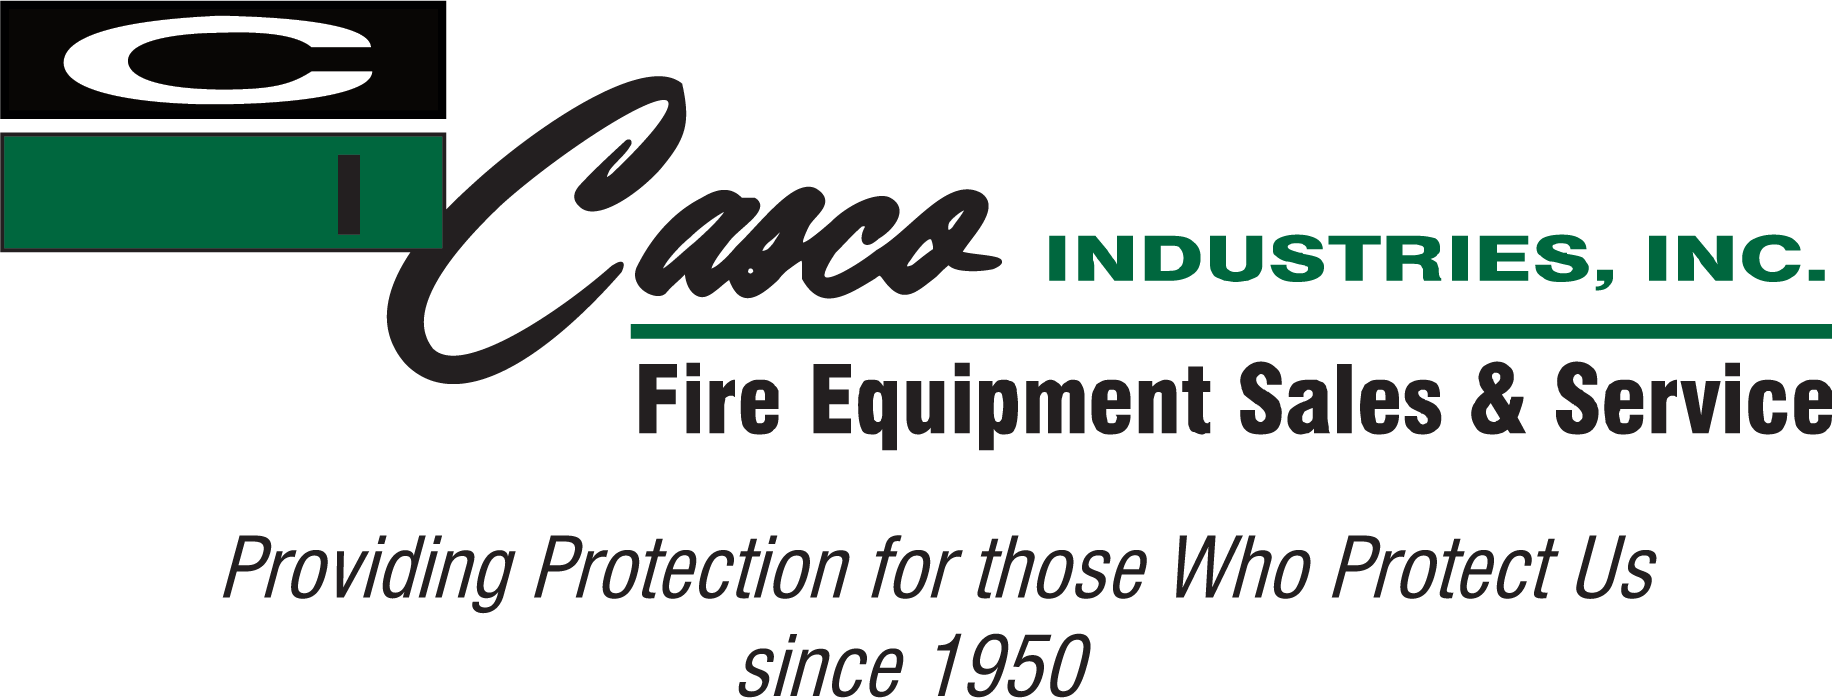 Casco Industries, Inc. Logo